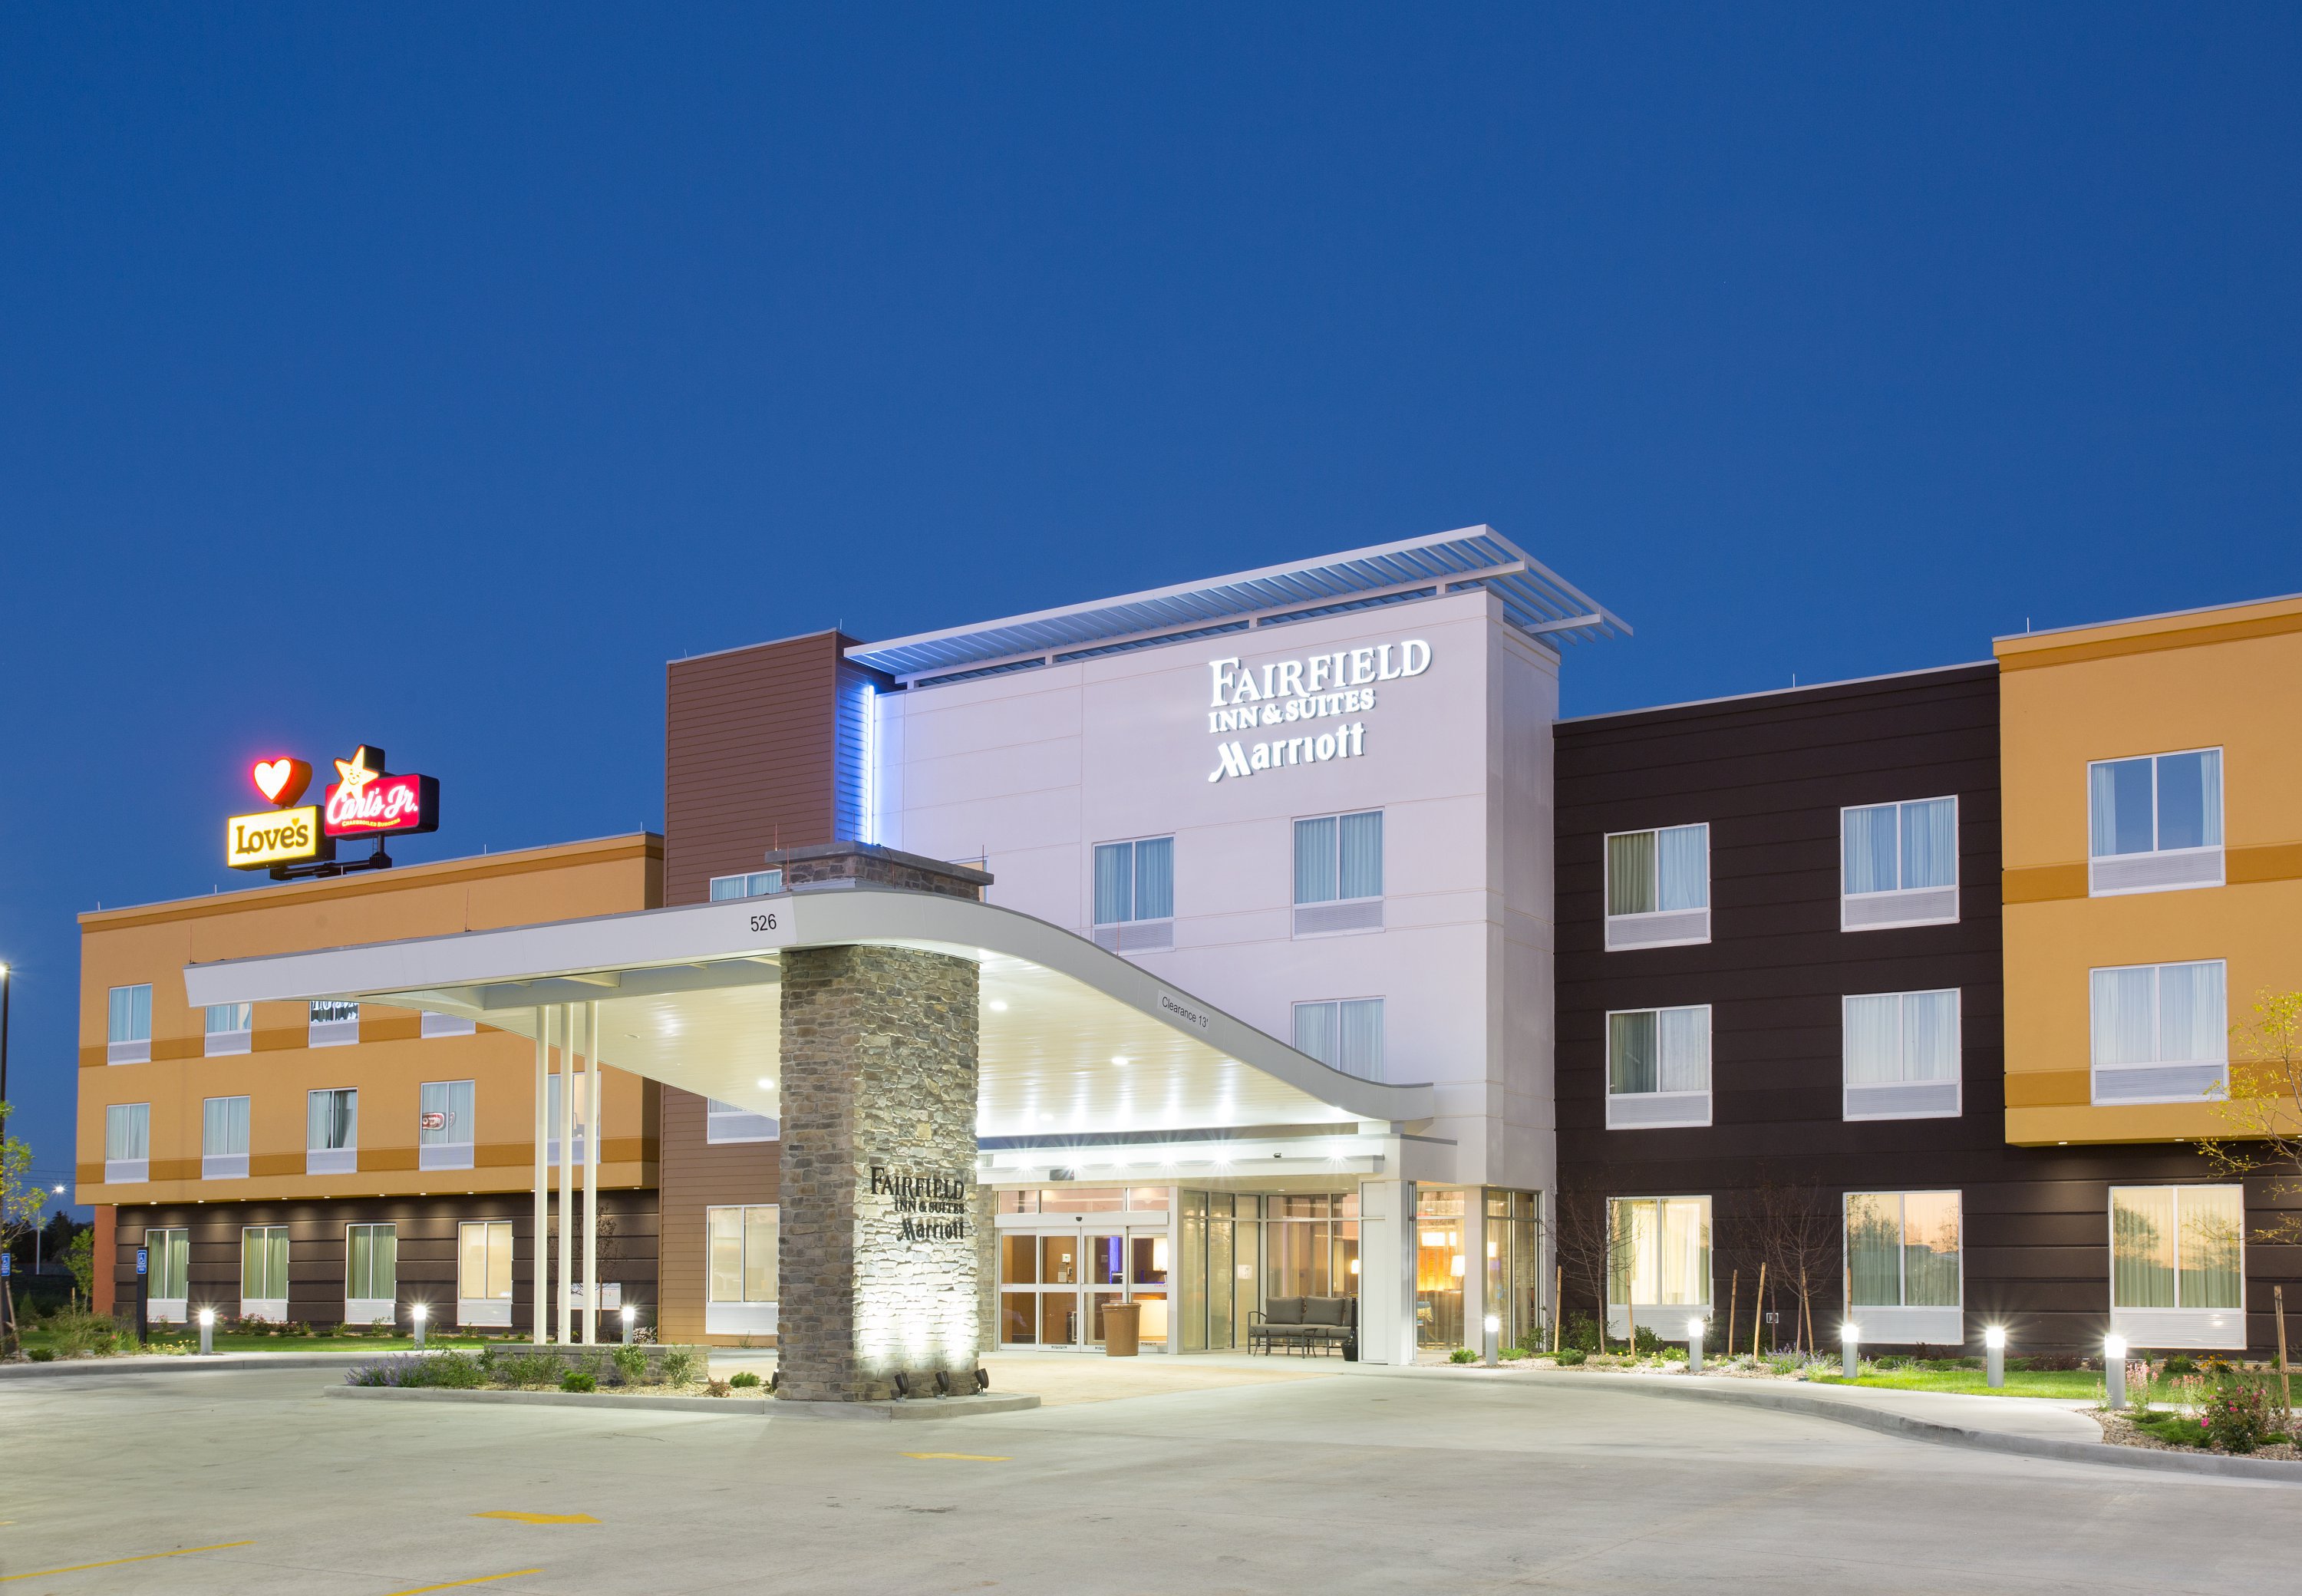 Photo of Fairfield Inn & Suites Burlington, Burlington, CO